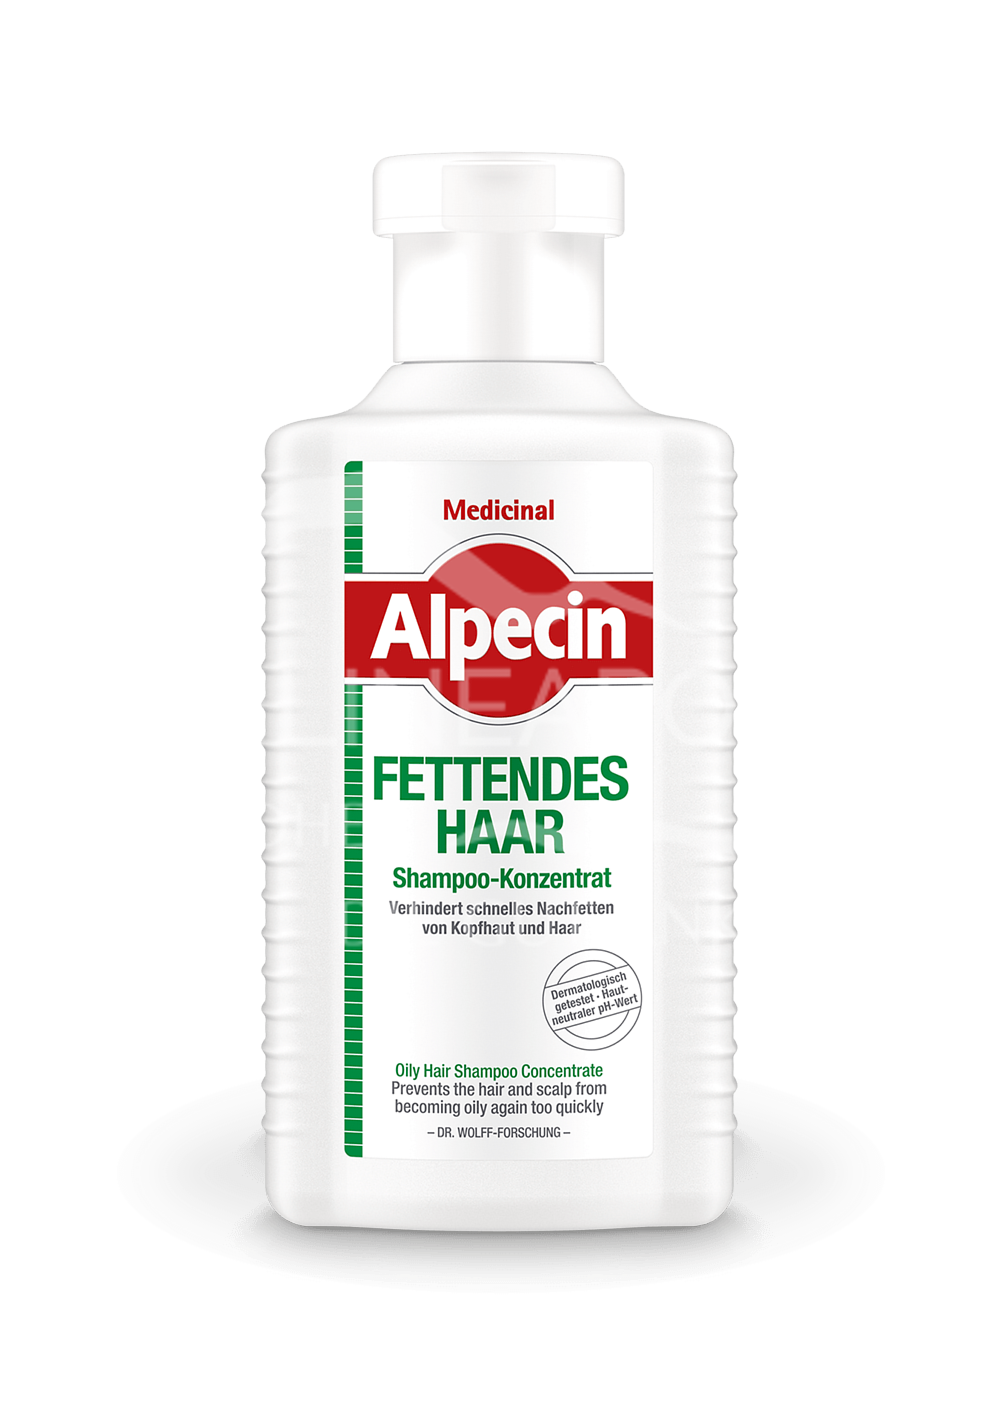 Alpecin Medicinal Shampoo-Konzentrat fettendes Haar 200ml